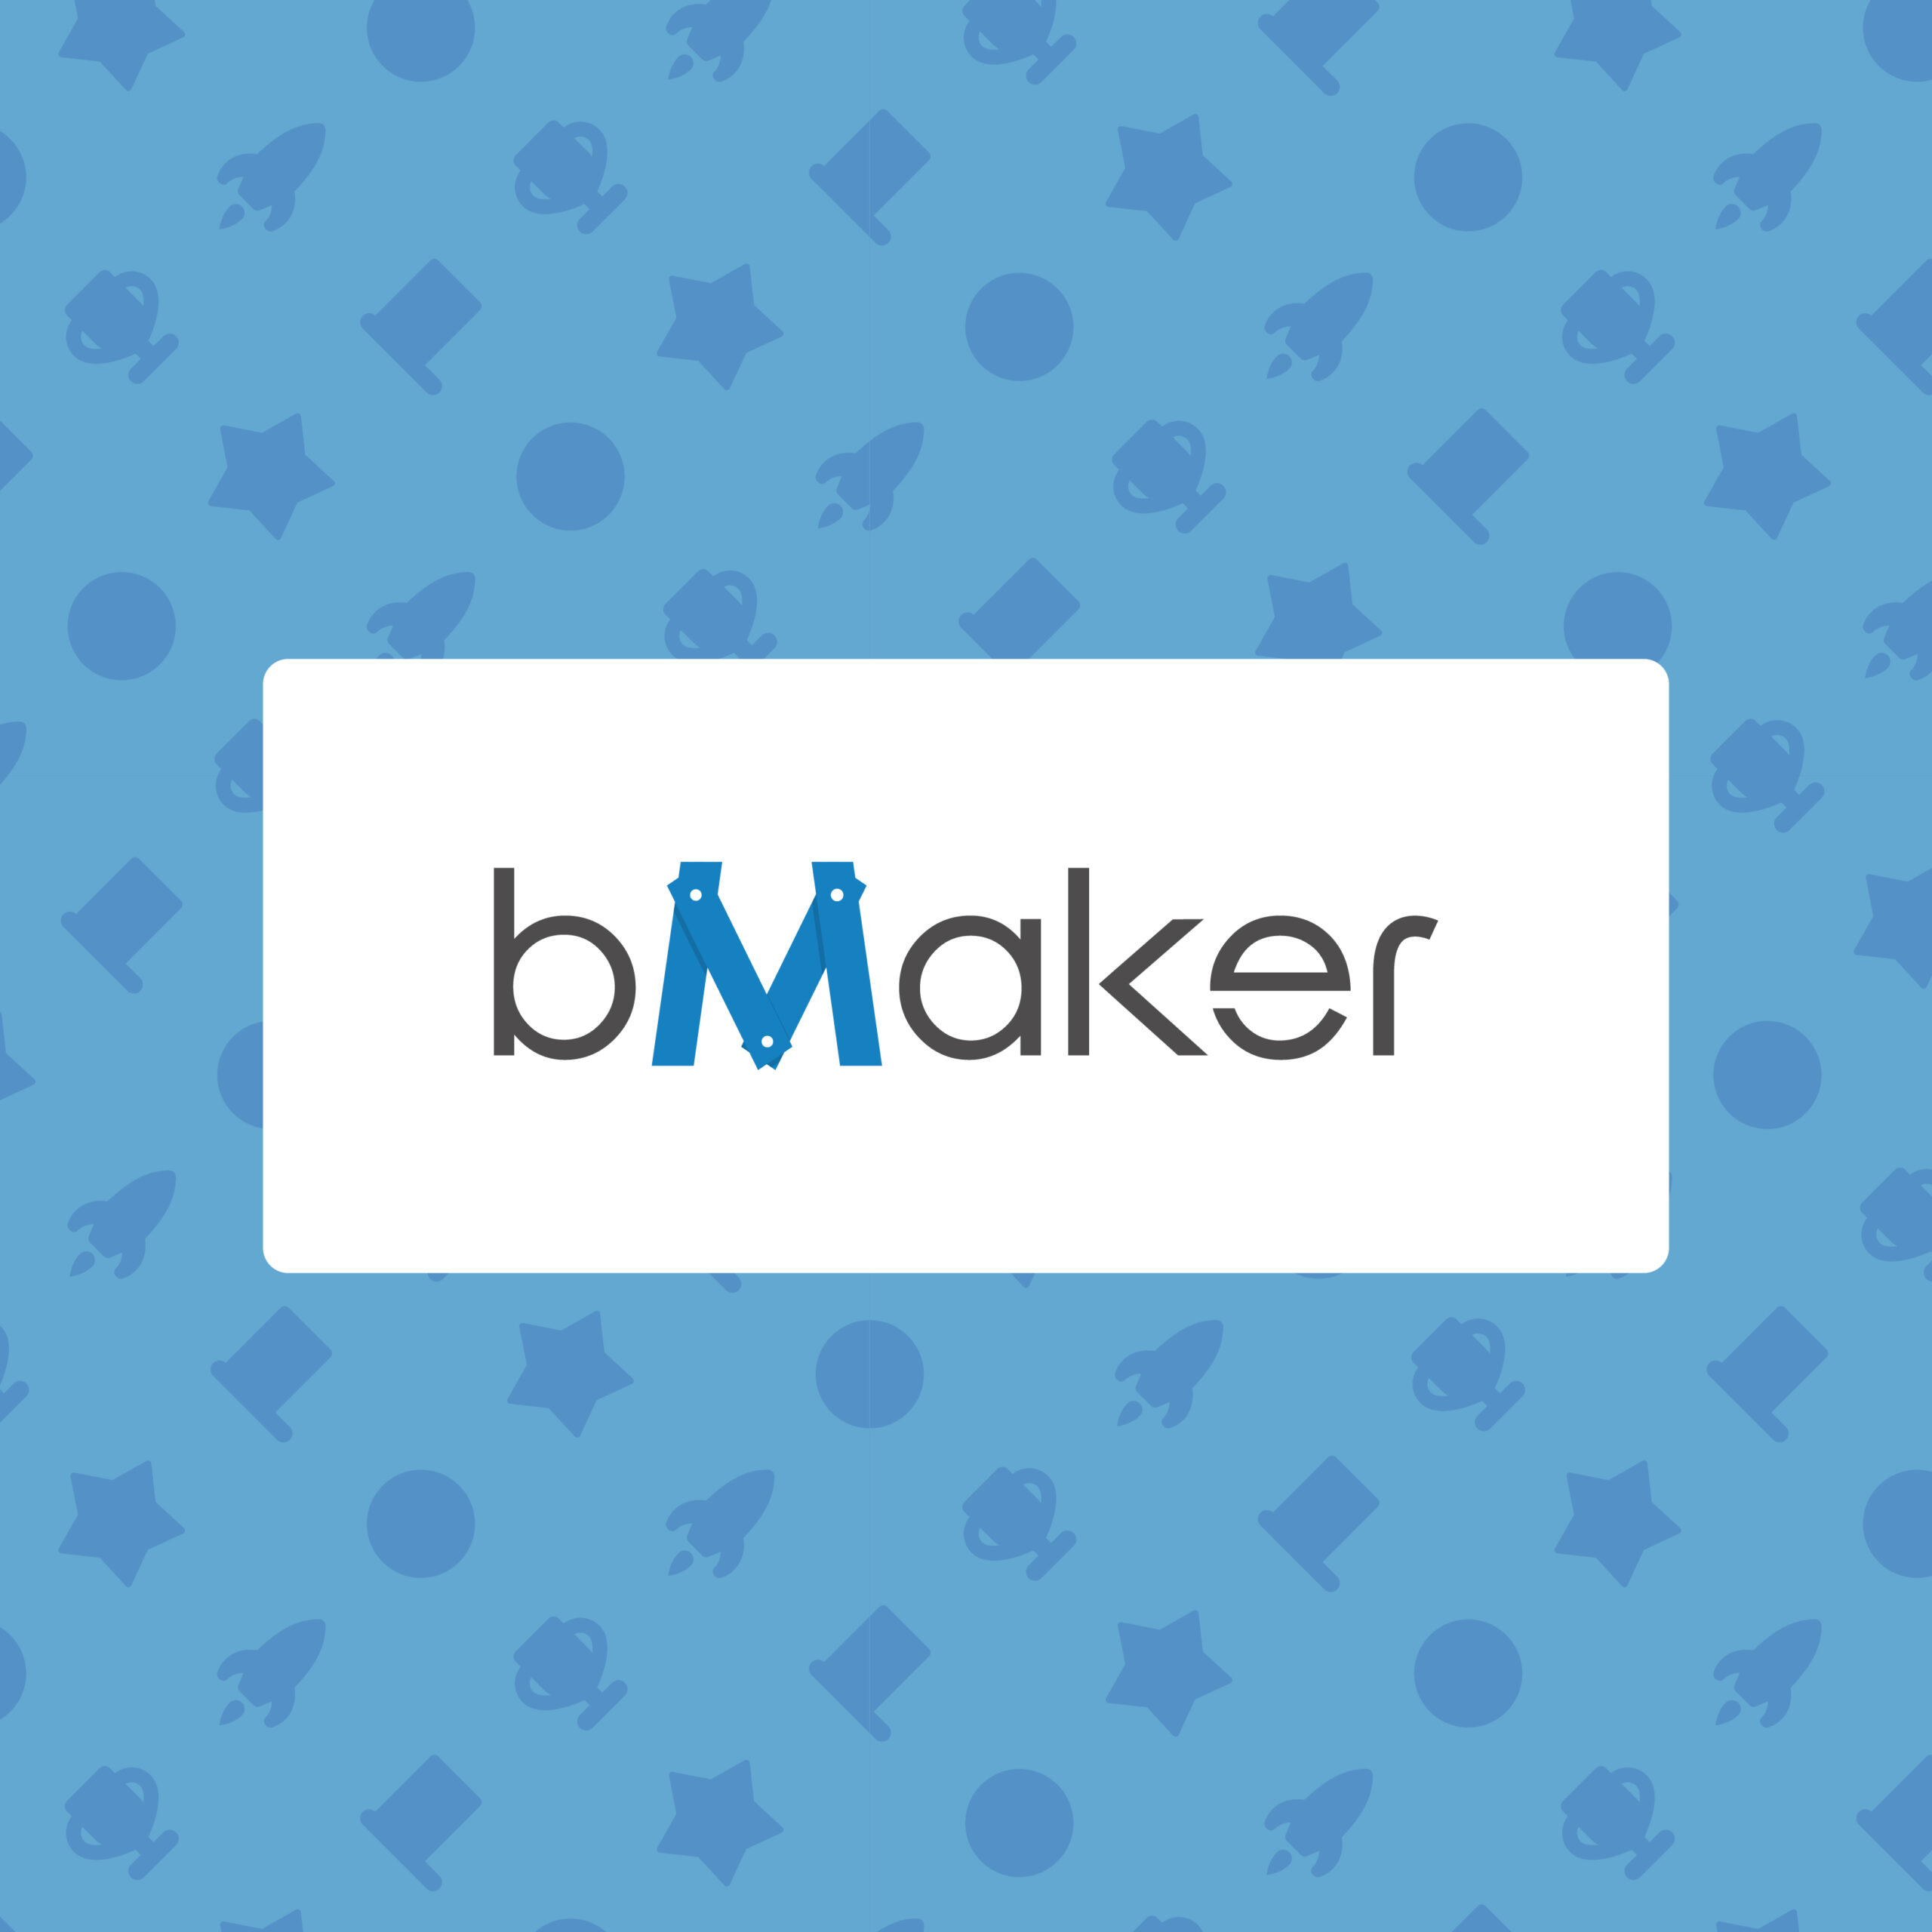 (c) Bmaker.es